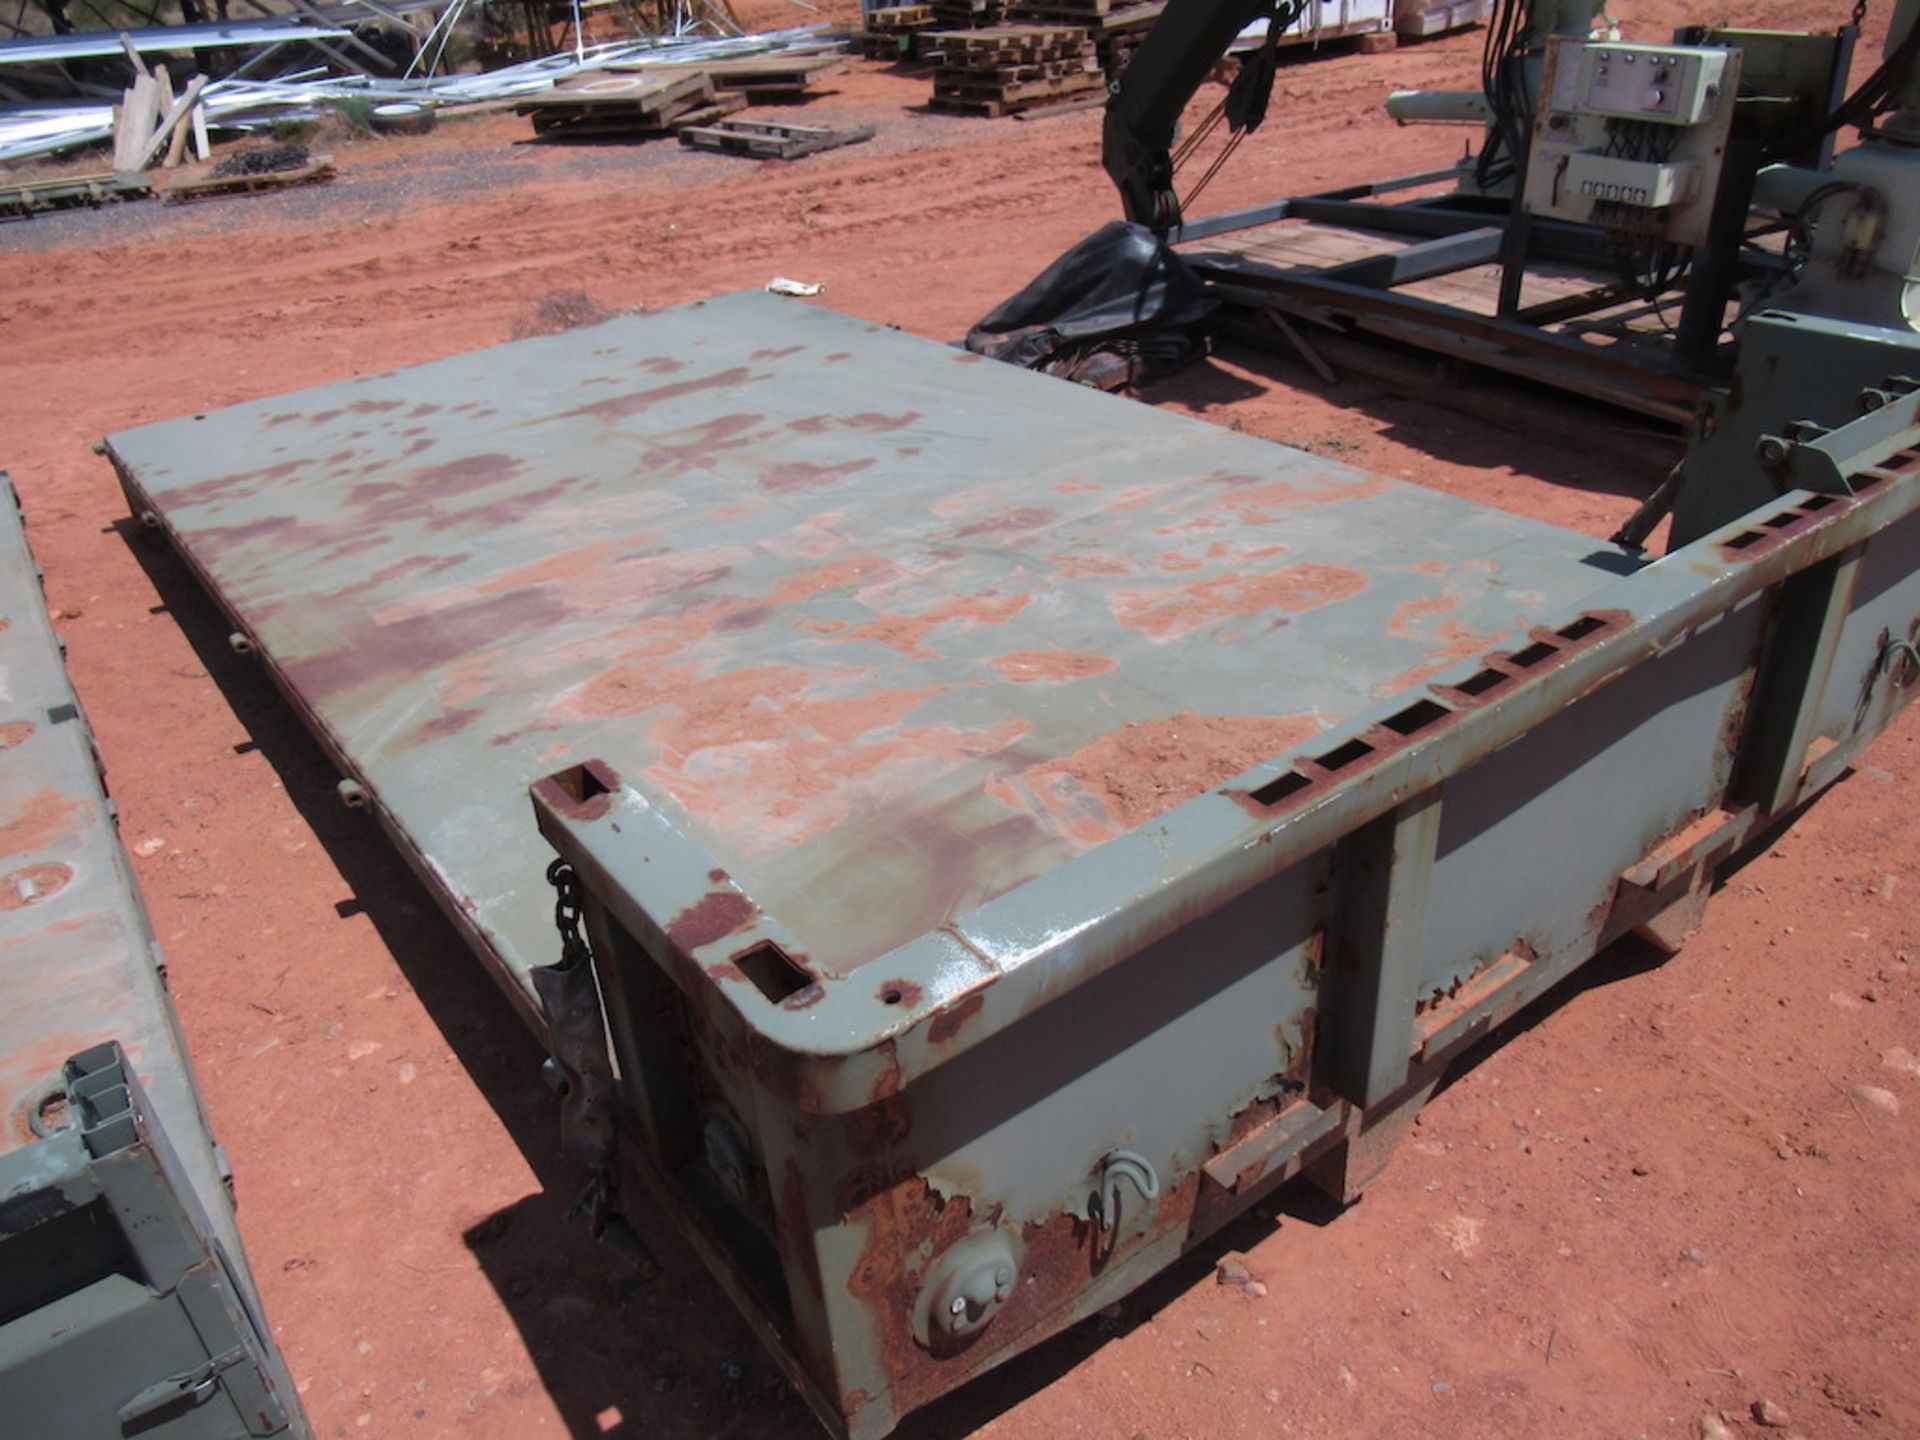 14 Fy. Steel Military Flat Bed, 1, 1964 lbs, 173"x96"x33", ISLE 1 POD 13 - Image 7 of 10